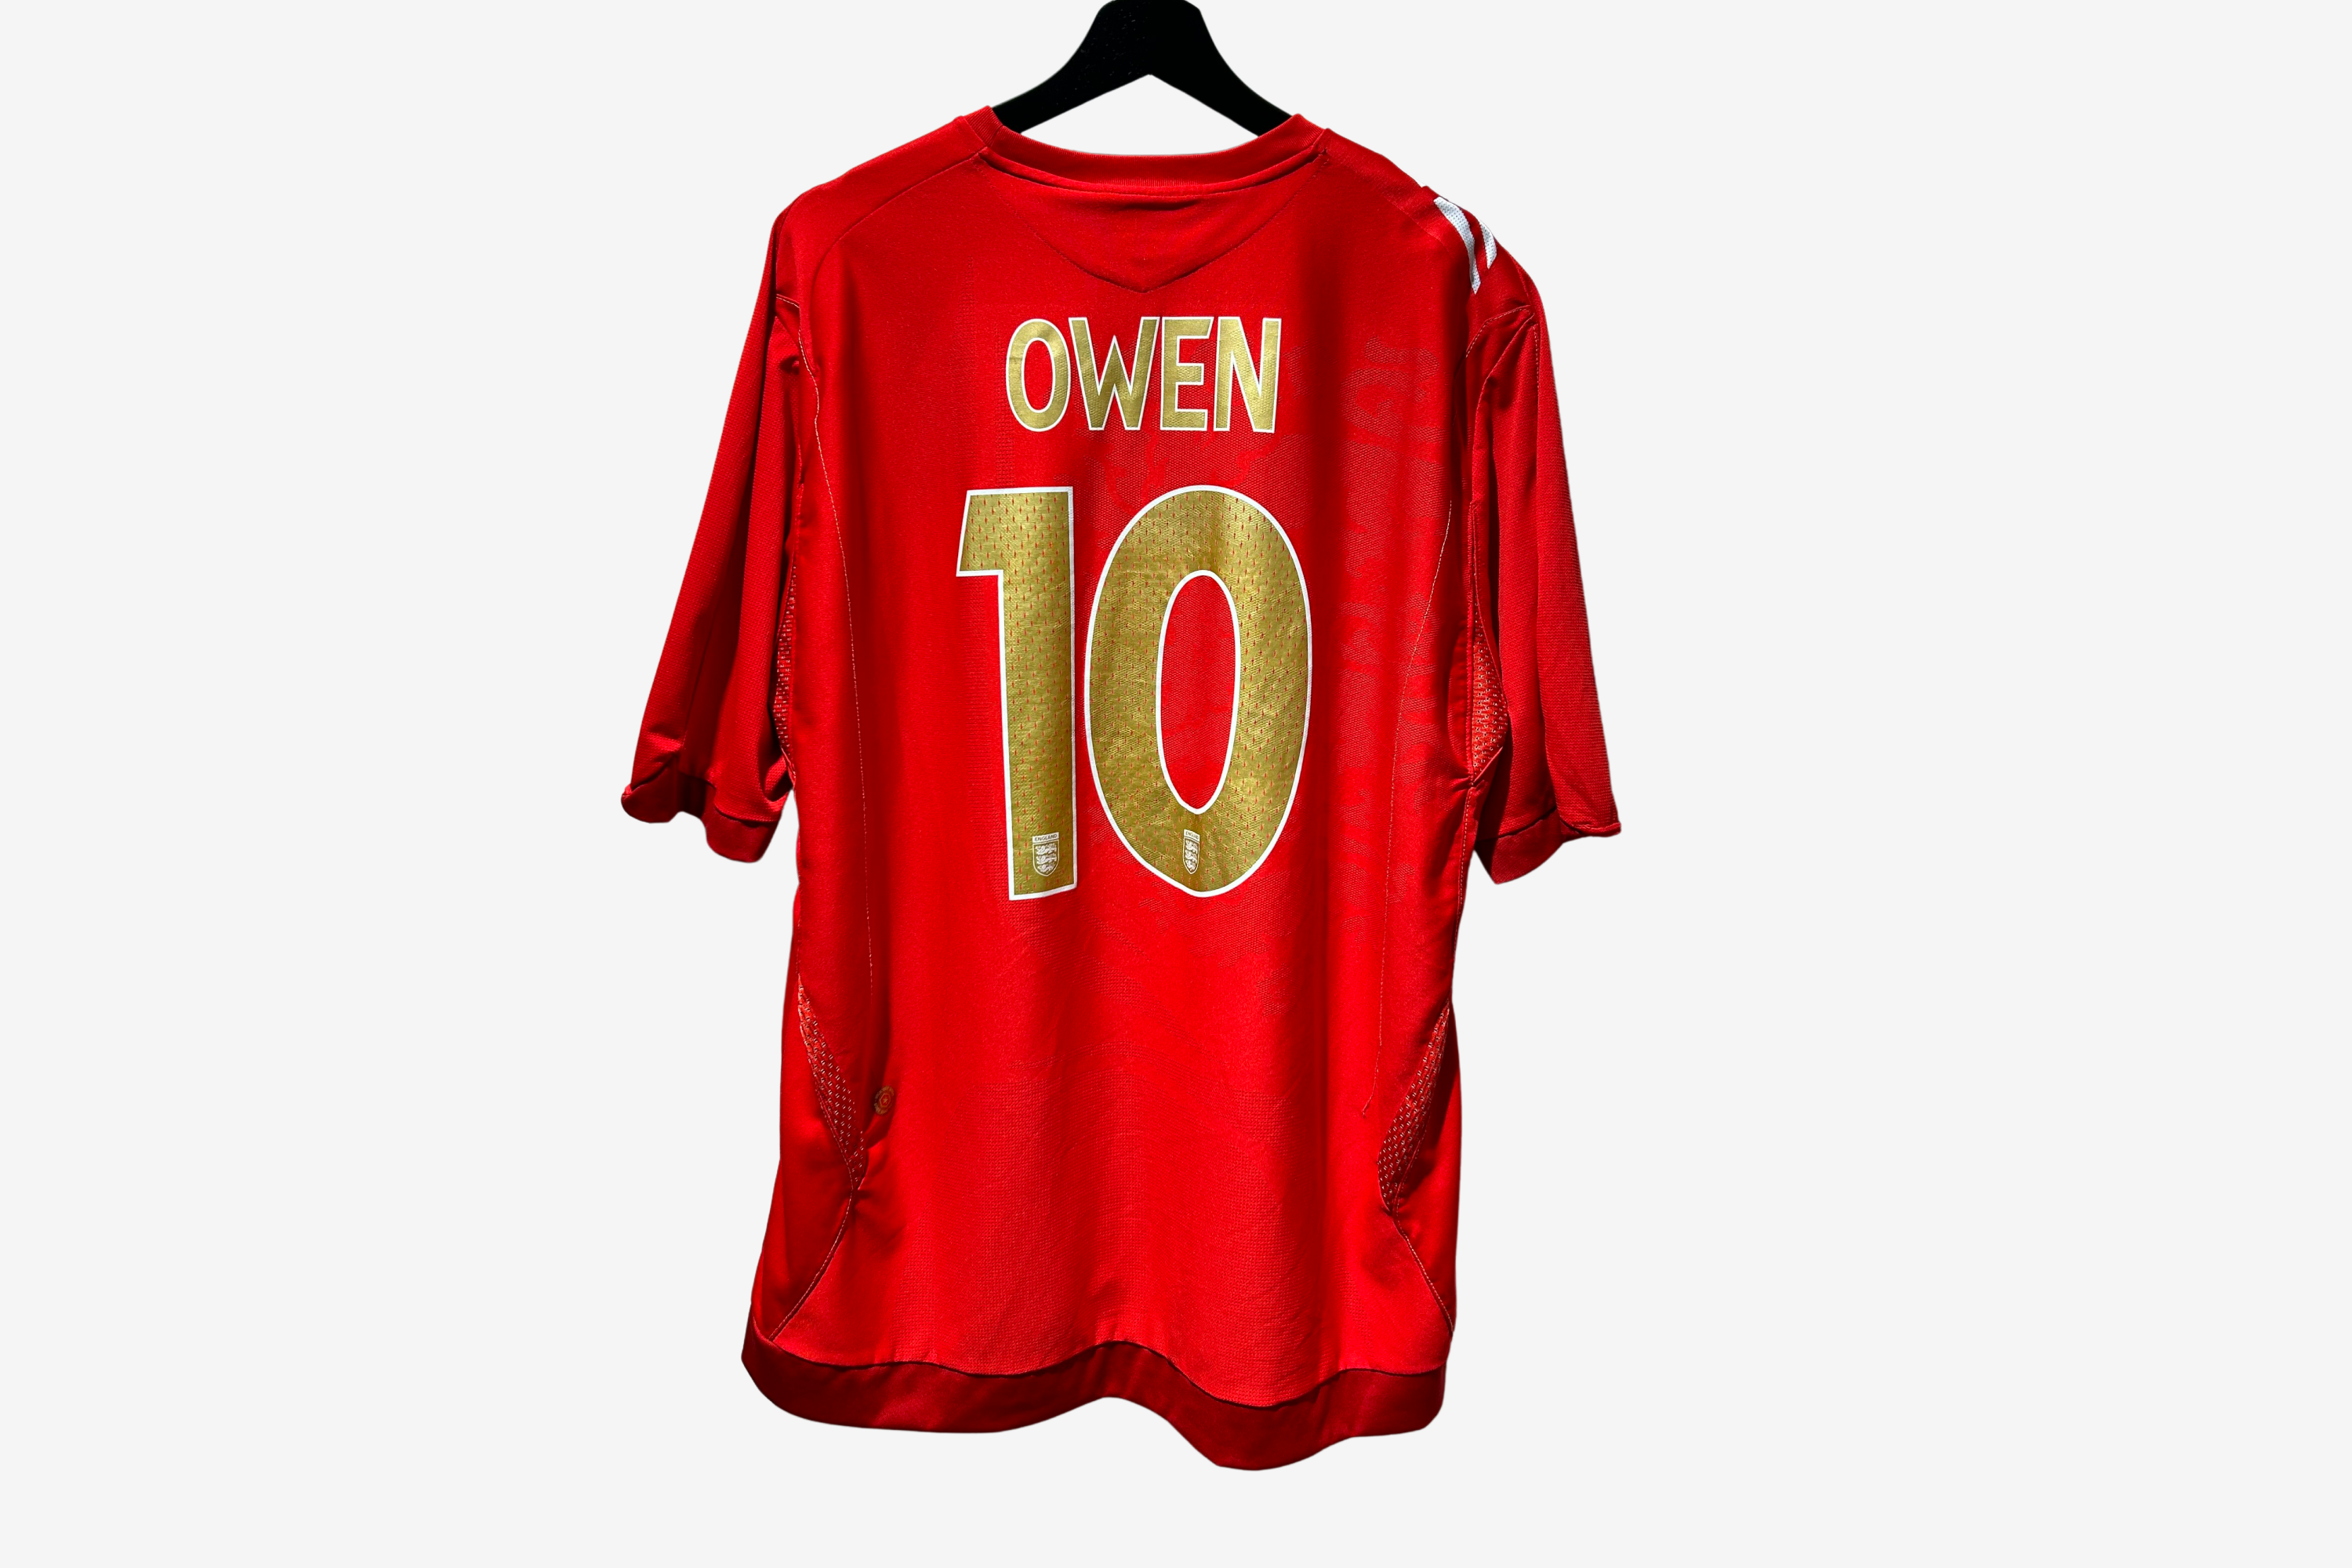 Umbro - England 2006 Away Football Shirt 'OWEN'